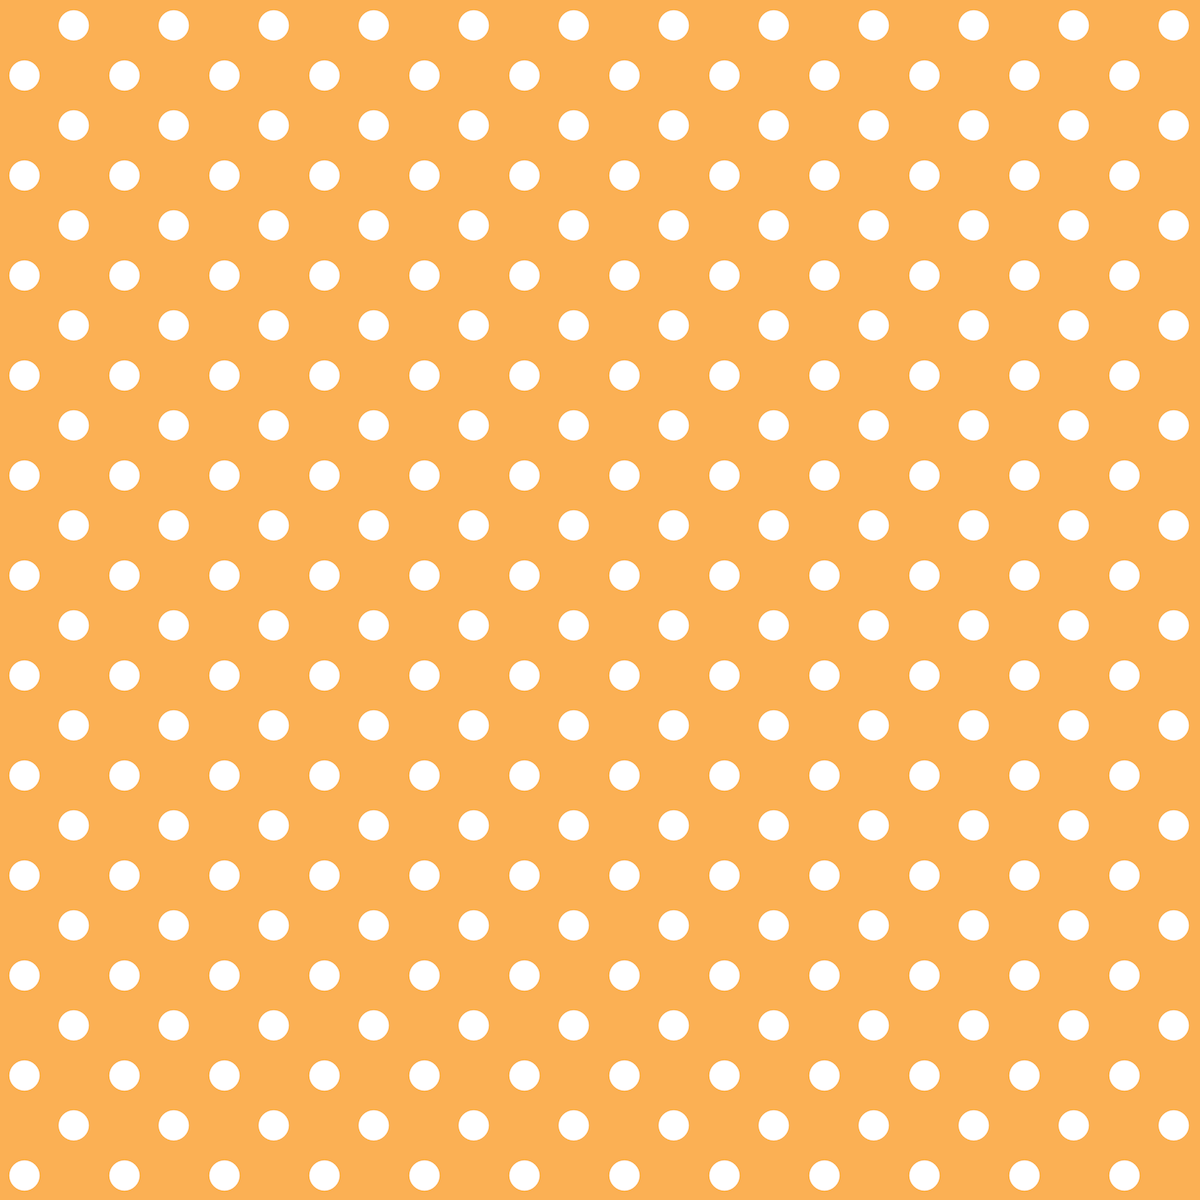 Another free digital polka dot scrapbooking paper set